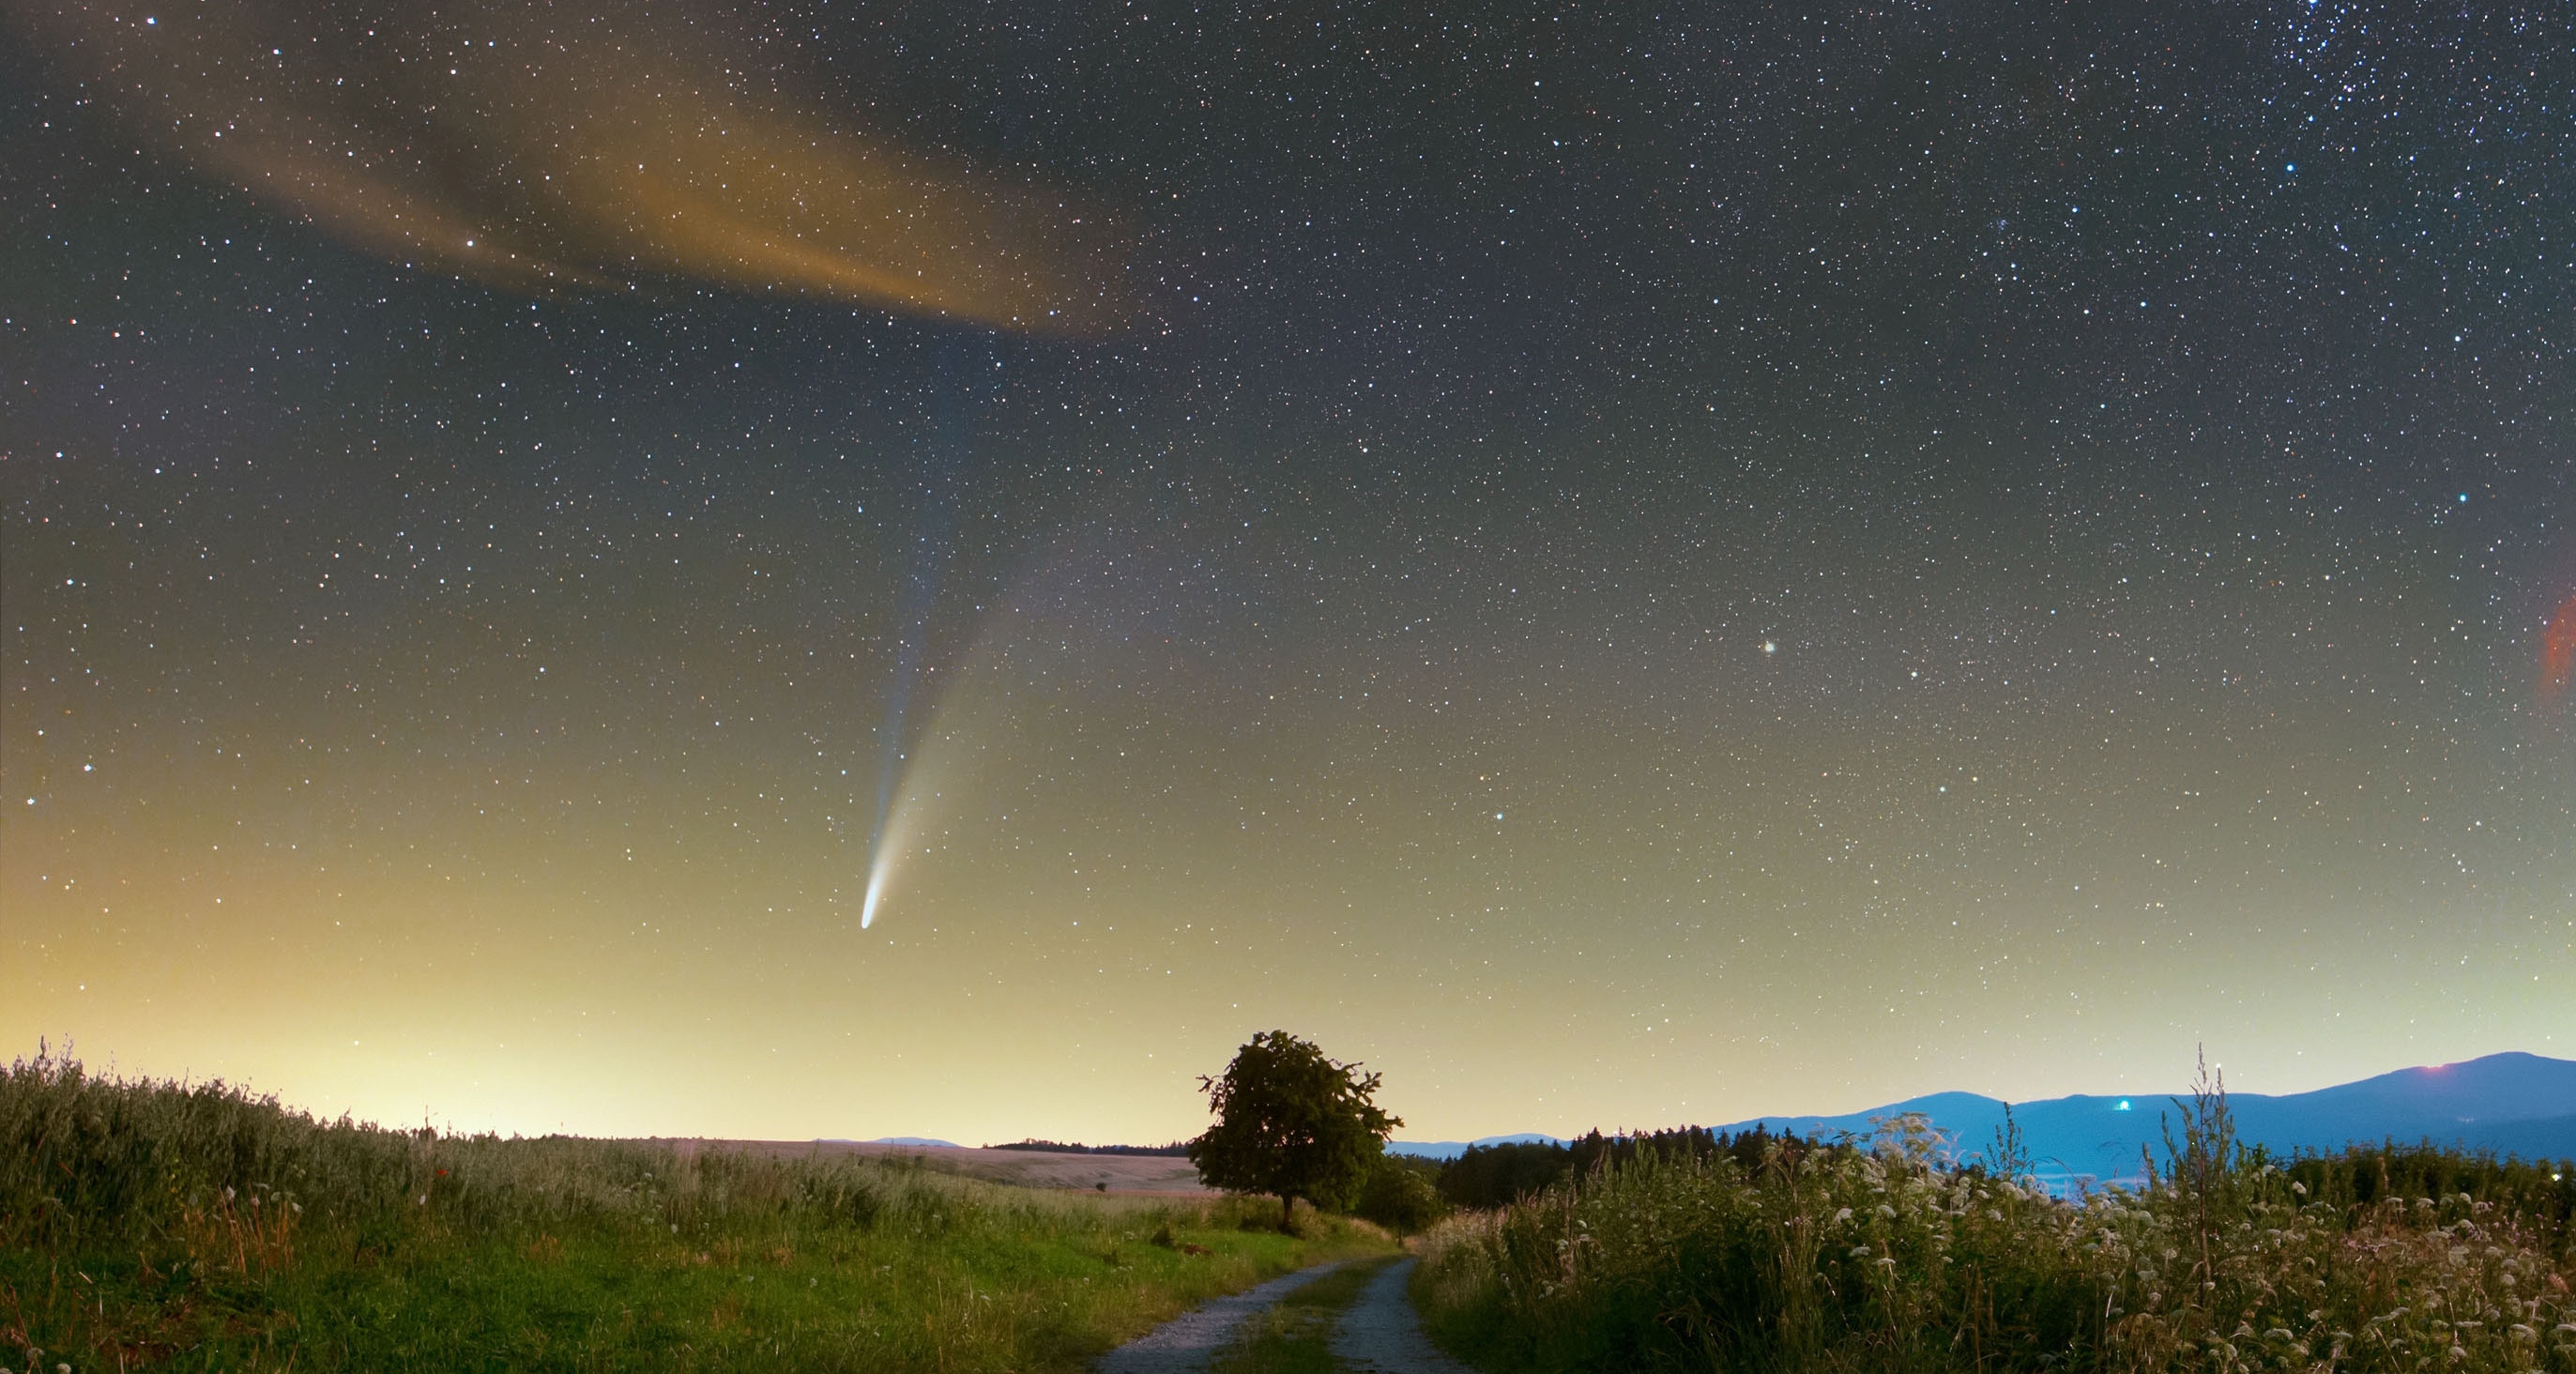 La comète à longue période C/2020 F3 (Neowise), photographiée en Pologne. © Jarek Oszywa, Apod, Nasa